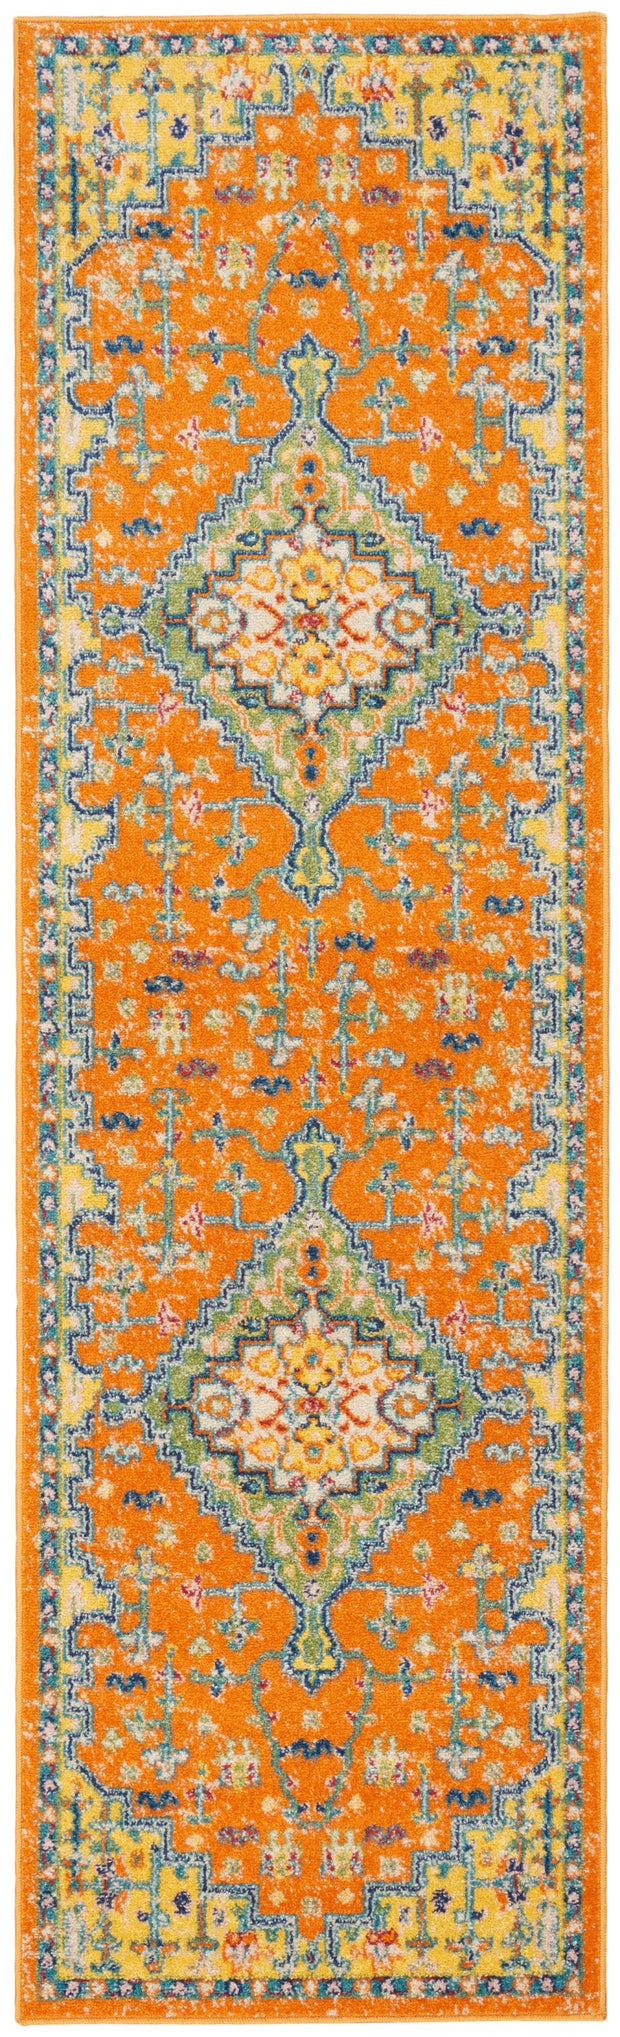 allur orange multicolor rug by nourison 99446837202 redo 2